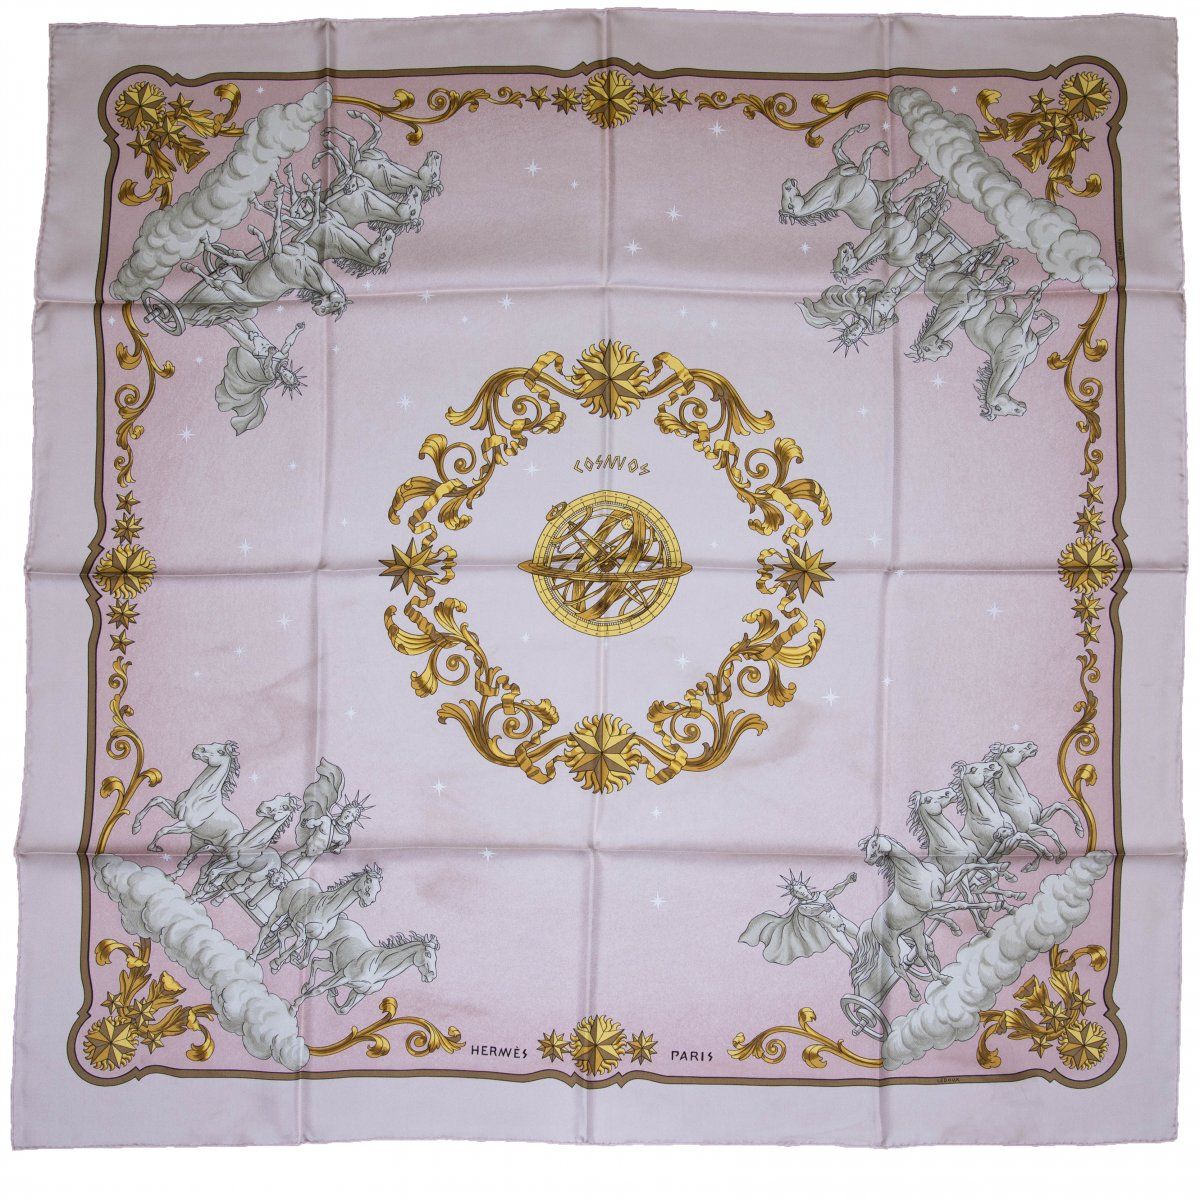 Null 爱马仕，巴黎，"宇宙 "围巾，1966年，丝绸，多色印刷。约90 x 90厘米。设计。菲利普-勒杜。

签名：© HERMÈS, LEDOUX,